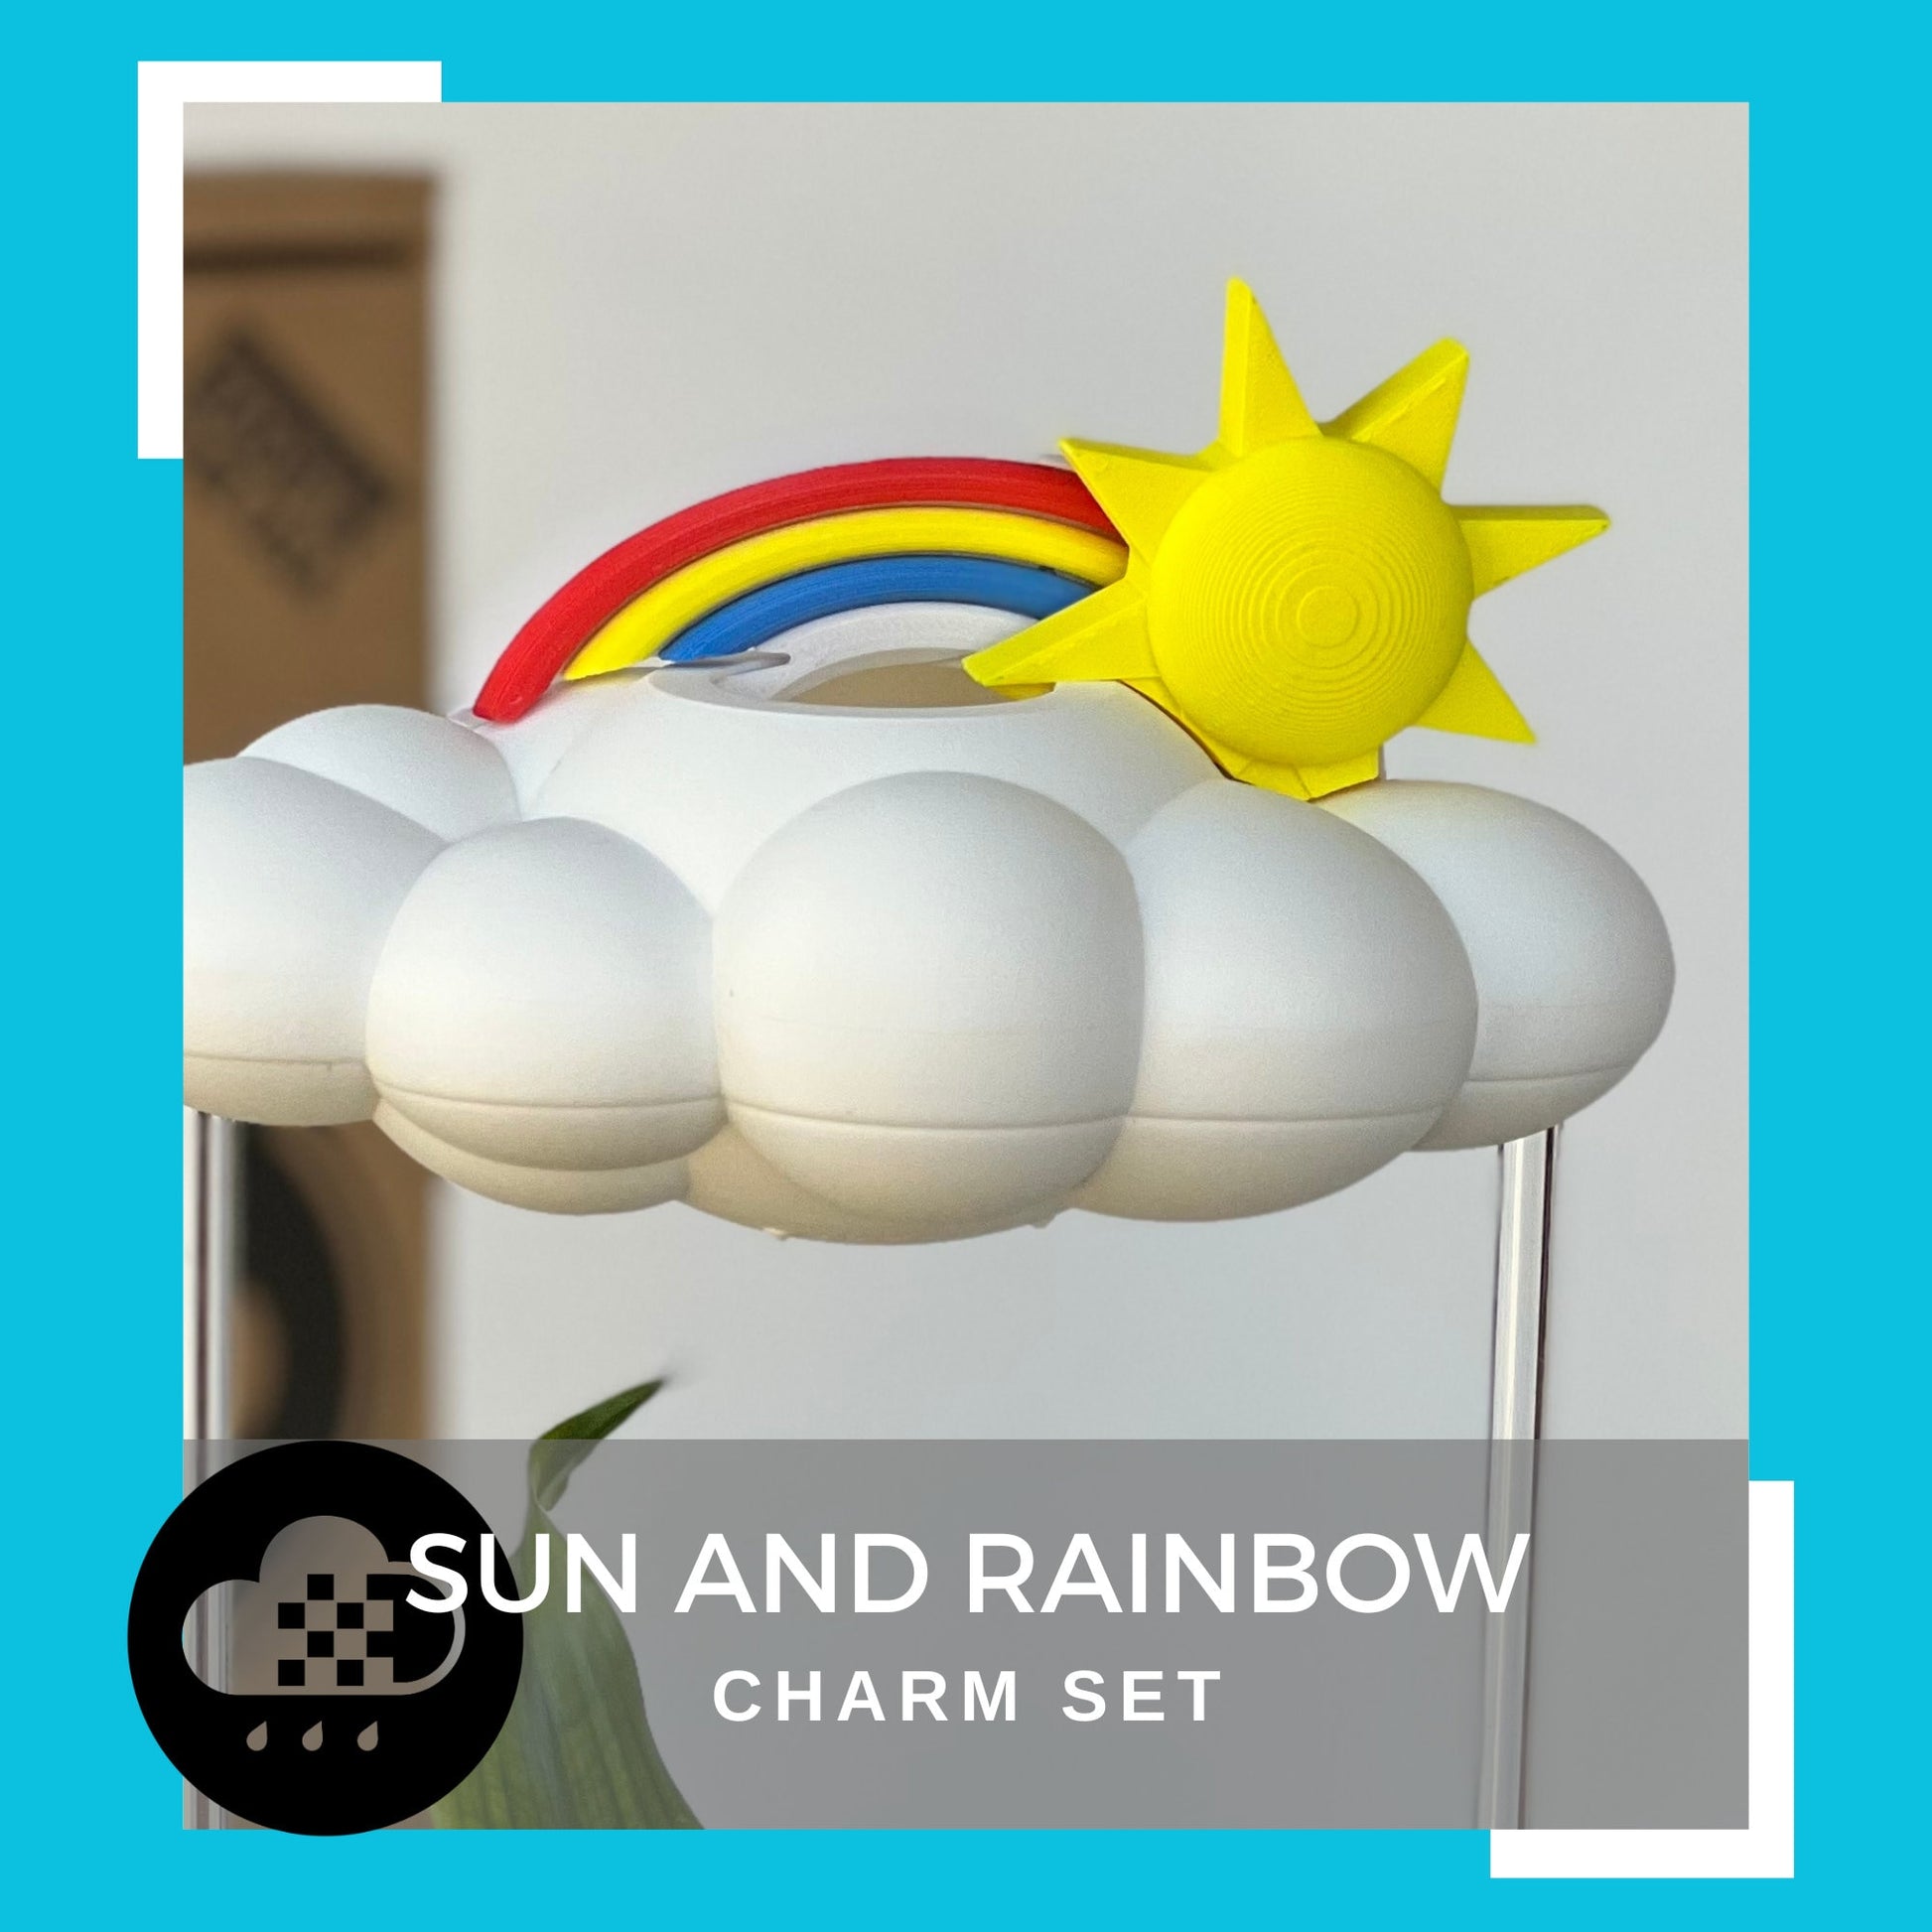 Sun and Rainbow charm set for dripping rain cloud with original dripping rain cloud